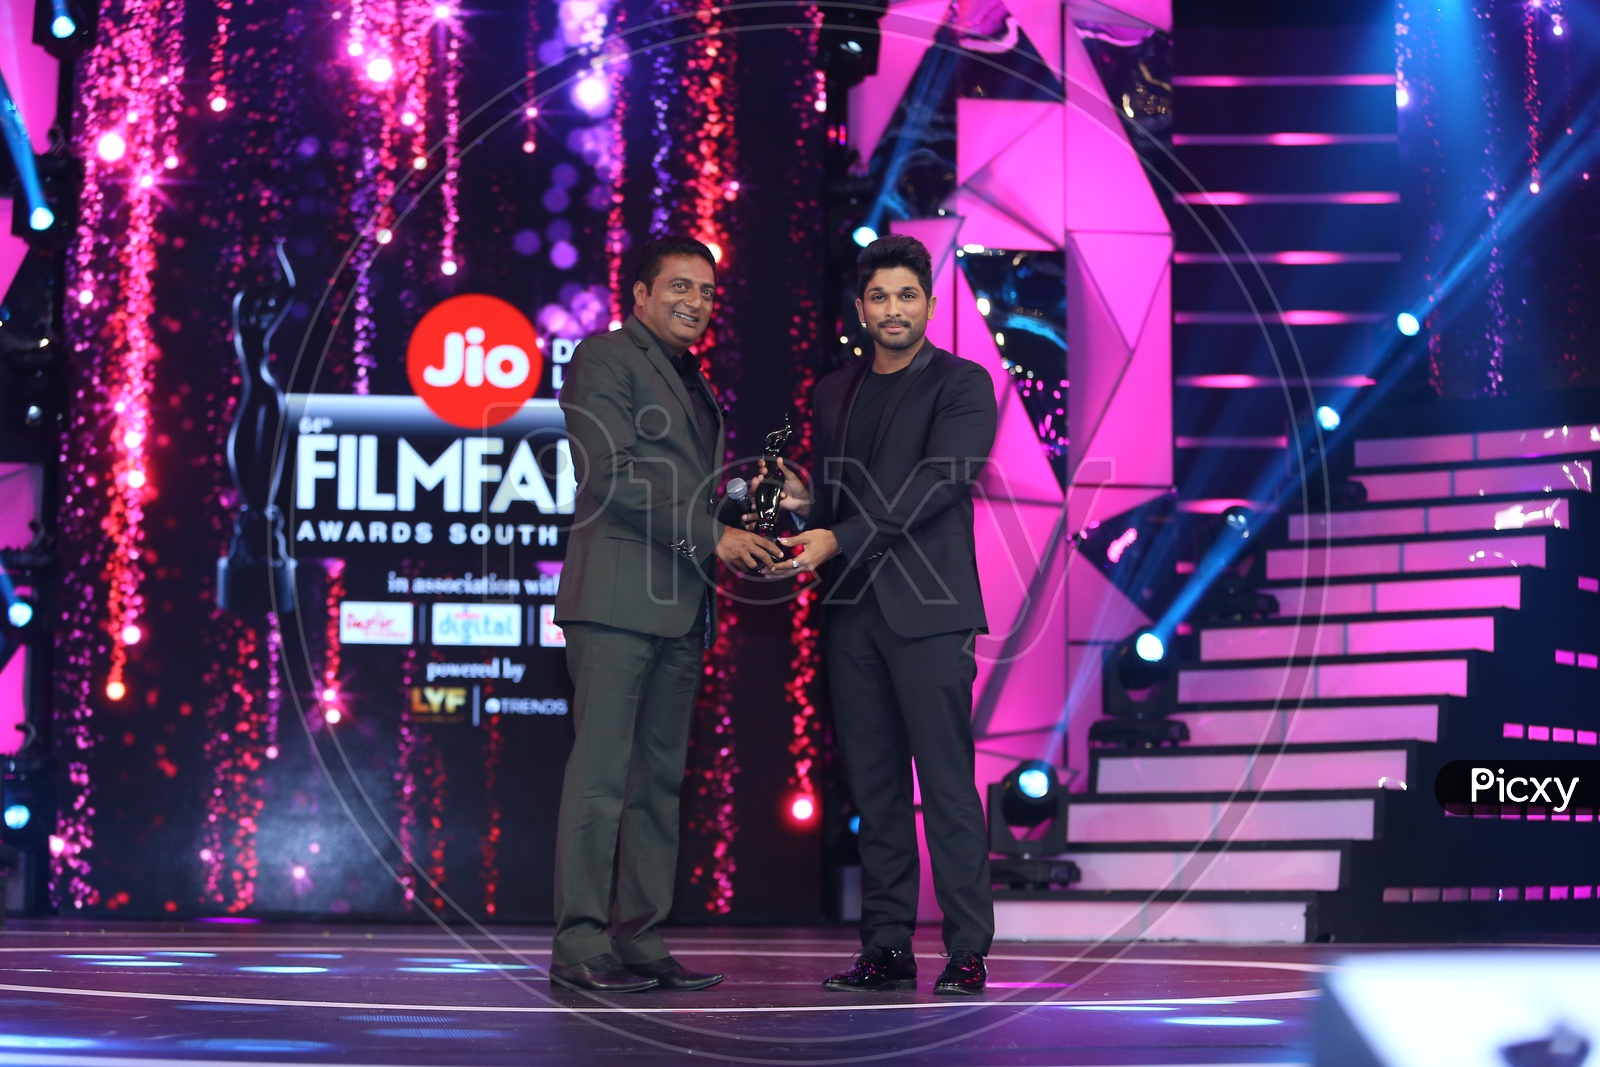 Actor Prakash Raj handing the filmfare award to Allu Arjun